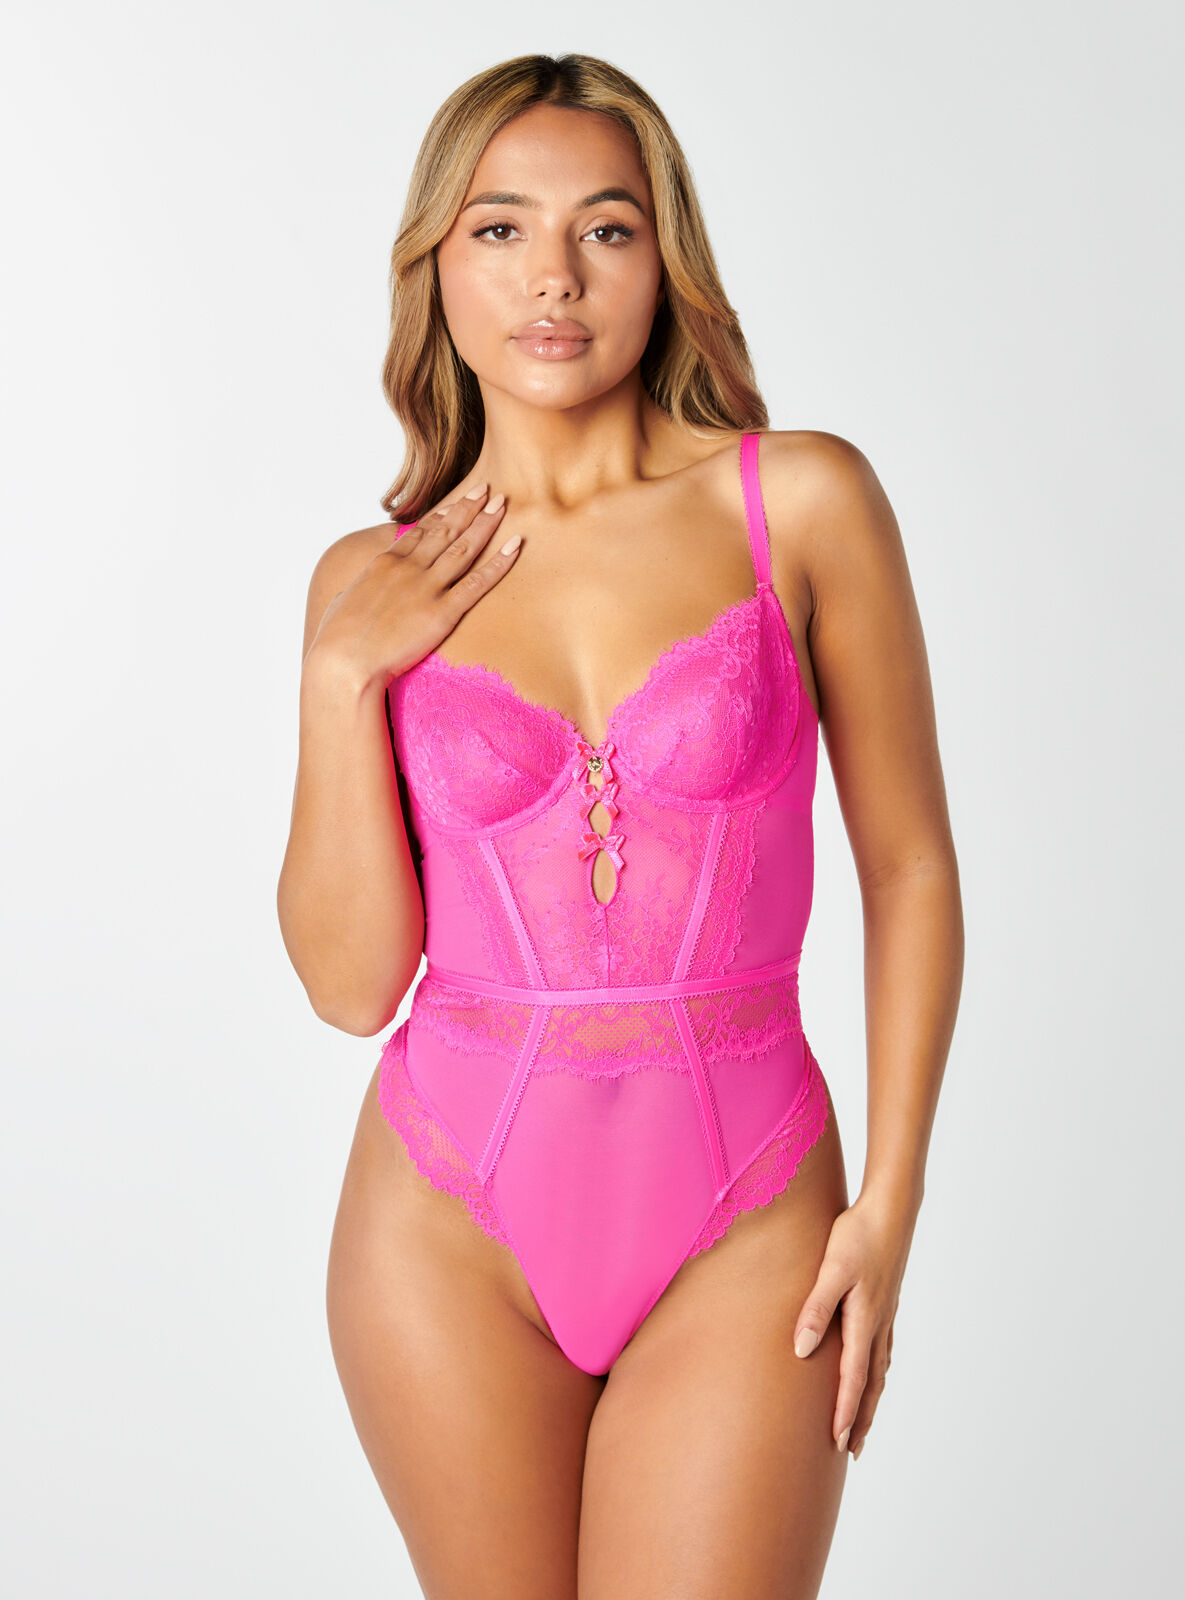 Boux Avenue Aubree body - Hot Pink - 30F